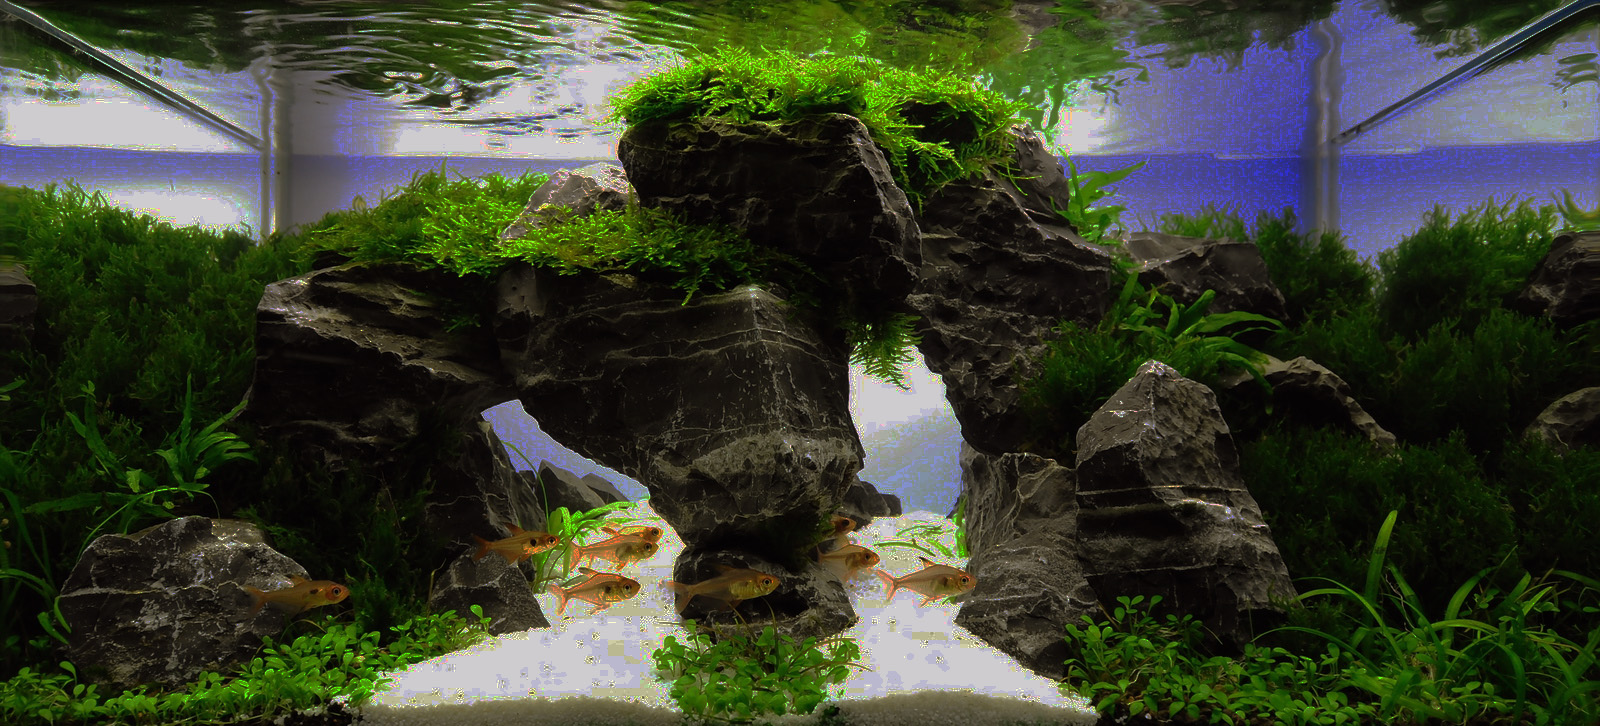 Moko Aquascape Shop: GALLERY
 Moss On Rocks In Aquarium